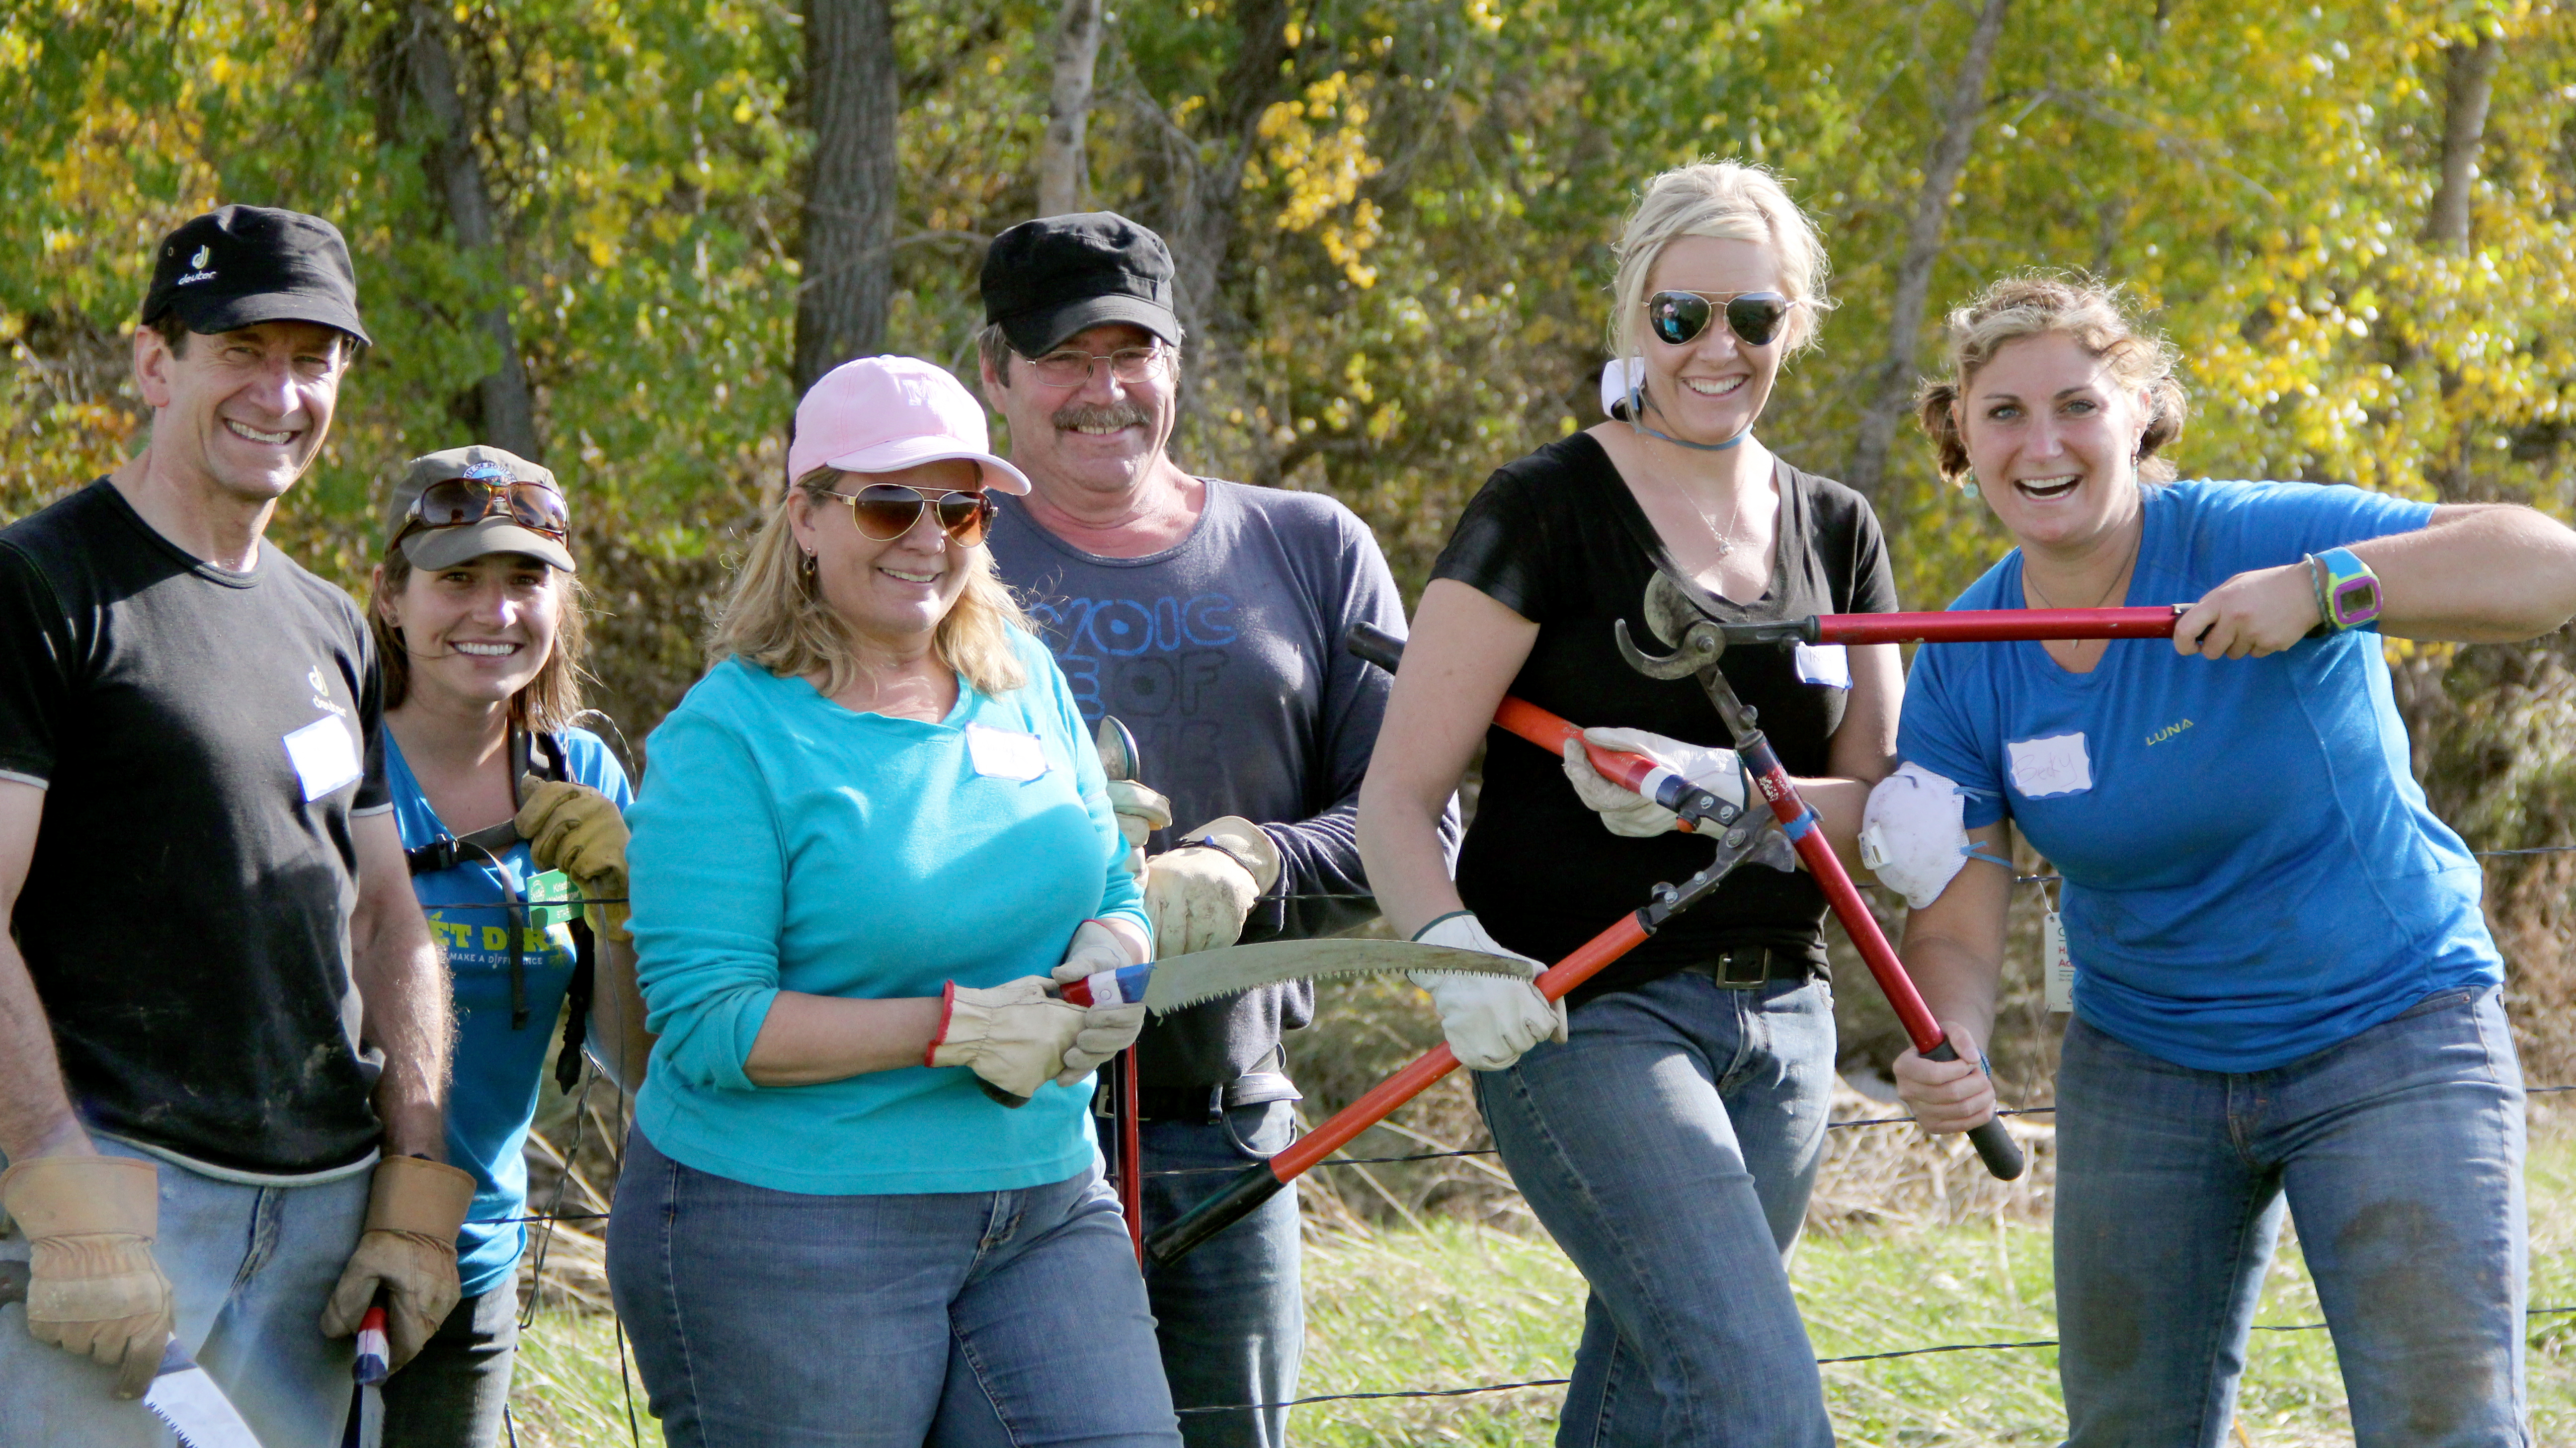 Volunteers helped rebuild trails damaged by the 2013 floods